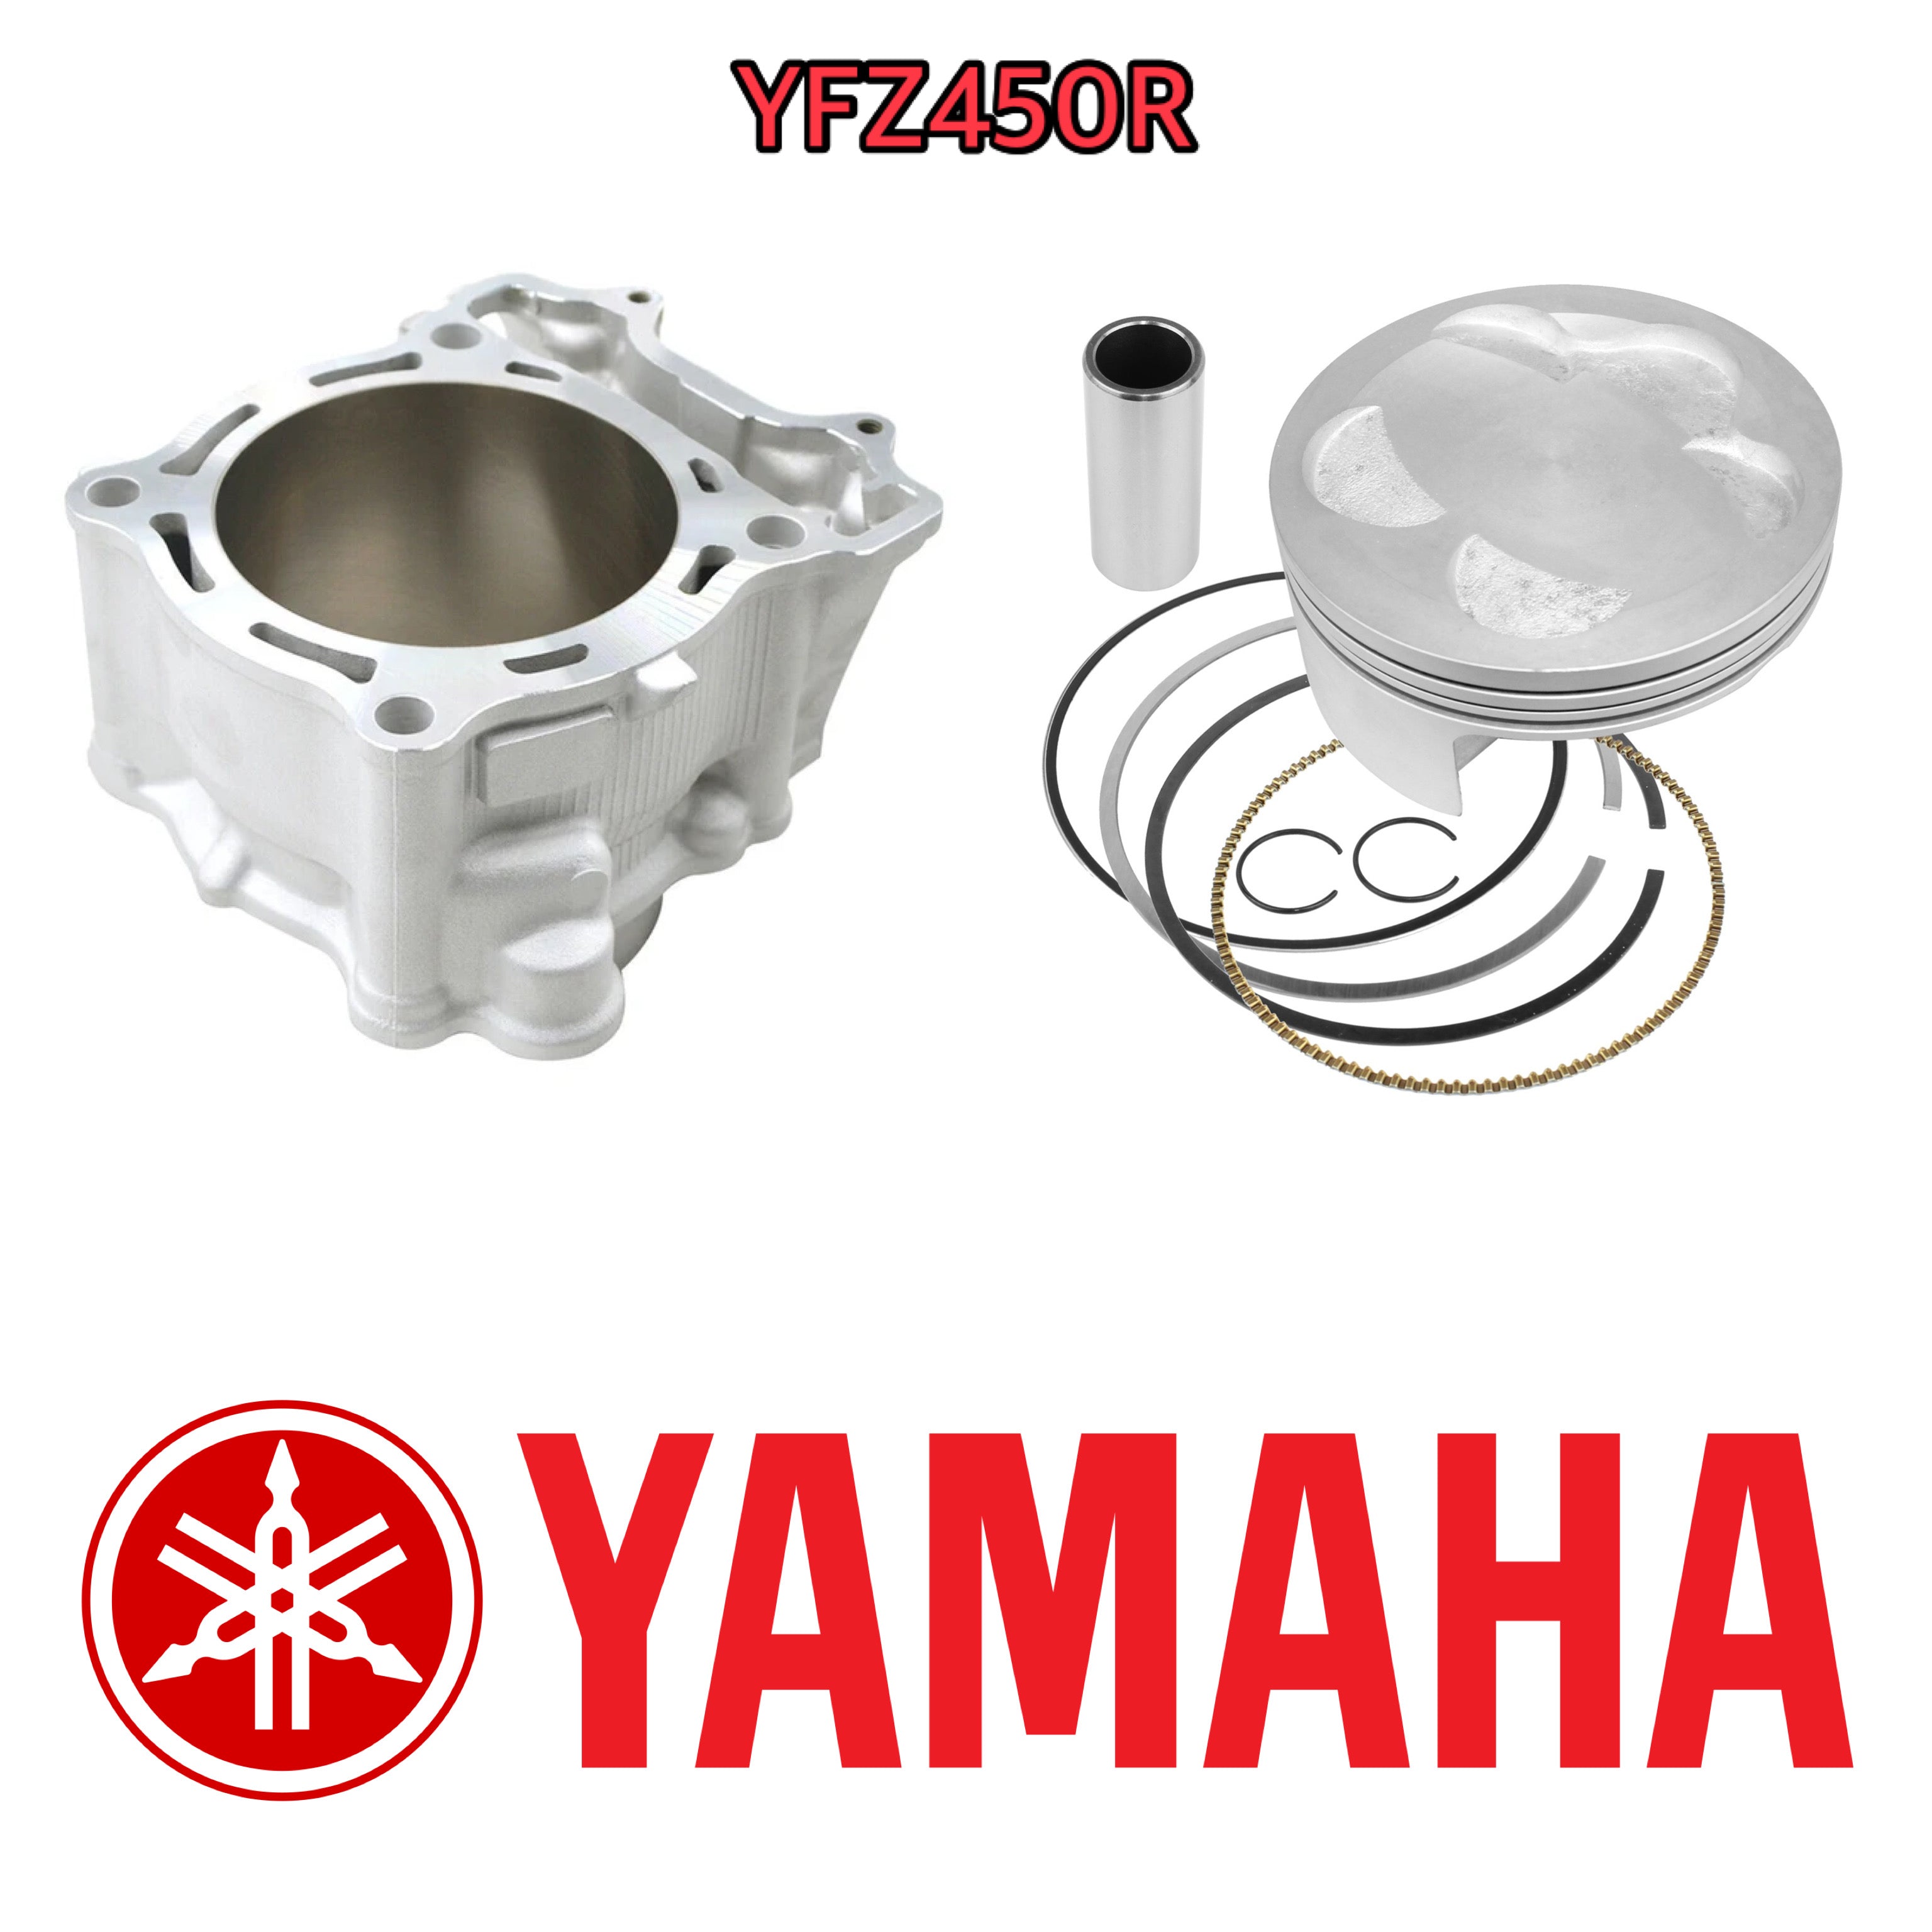 Yfz450r oem cylinder kit